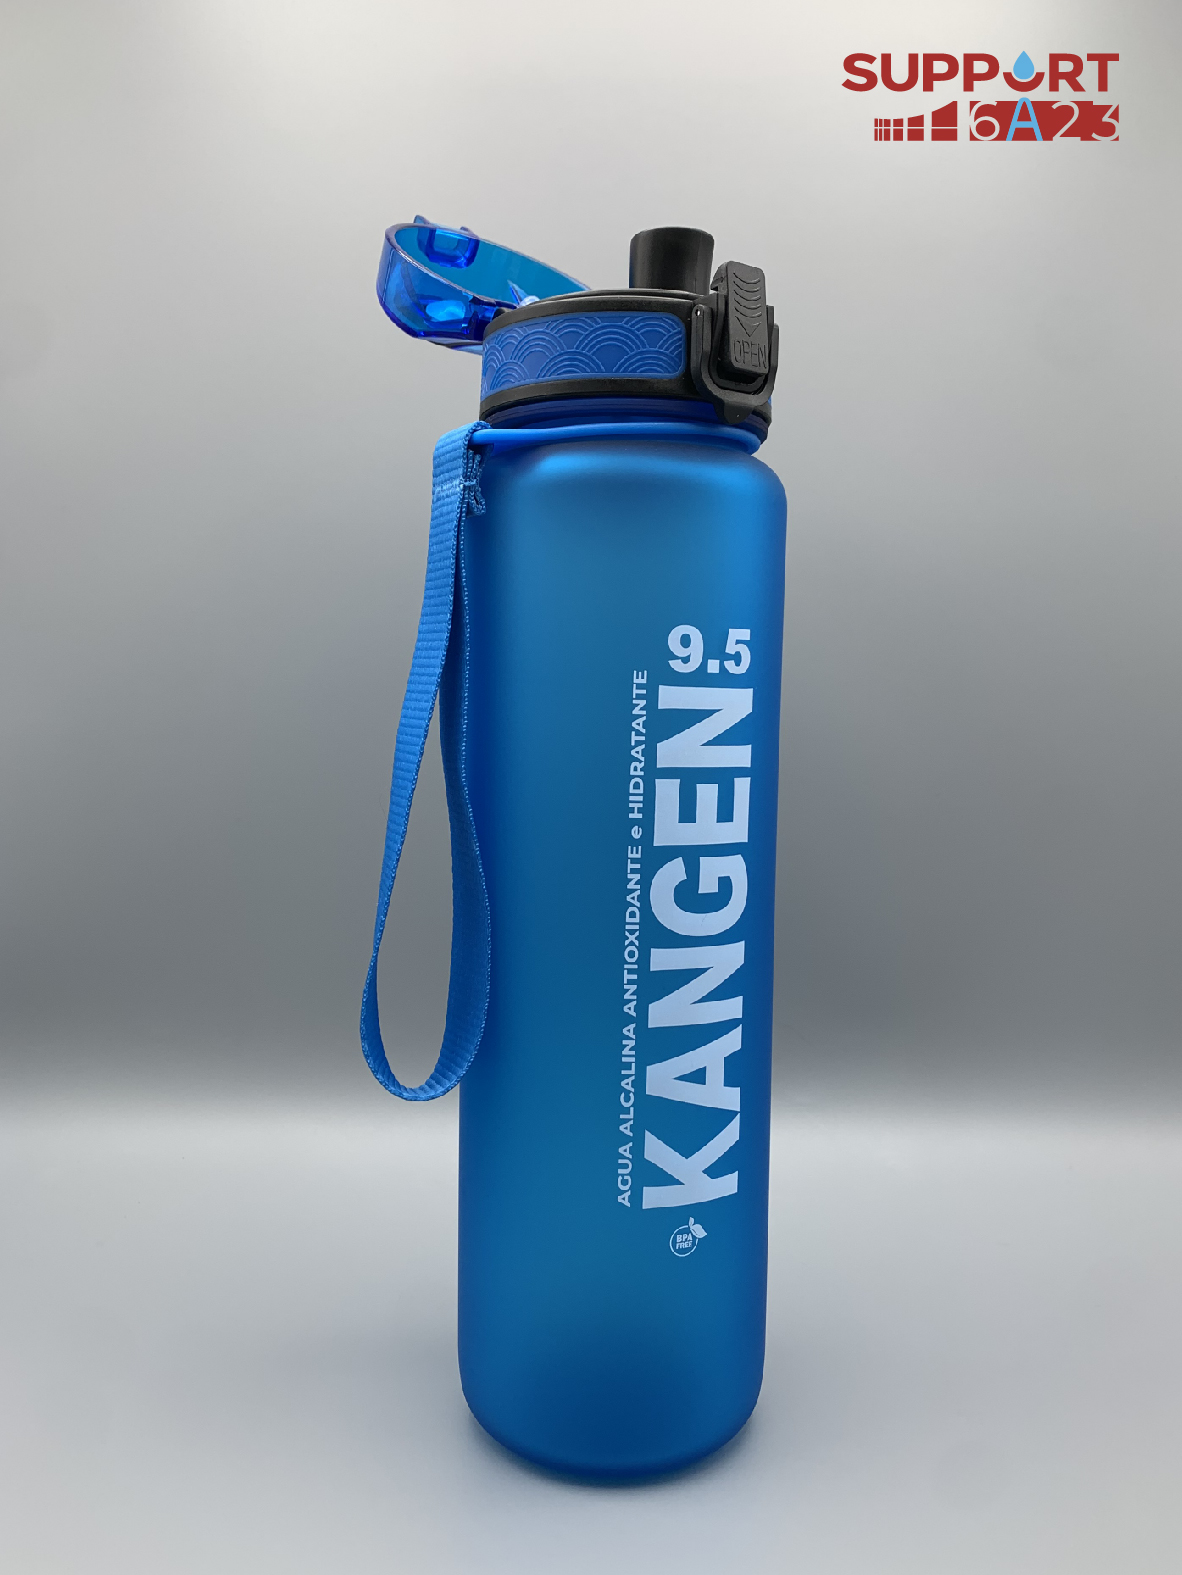 Bolsa de Agua 5L Personalizada KANGEN color AZUL OSCURO - mentor6a23